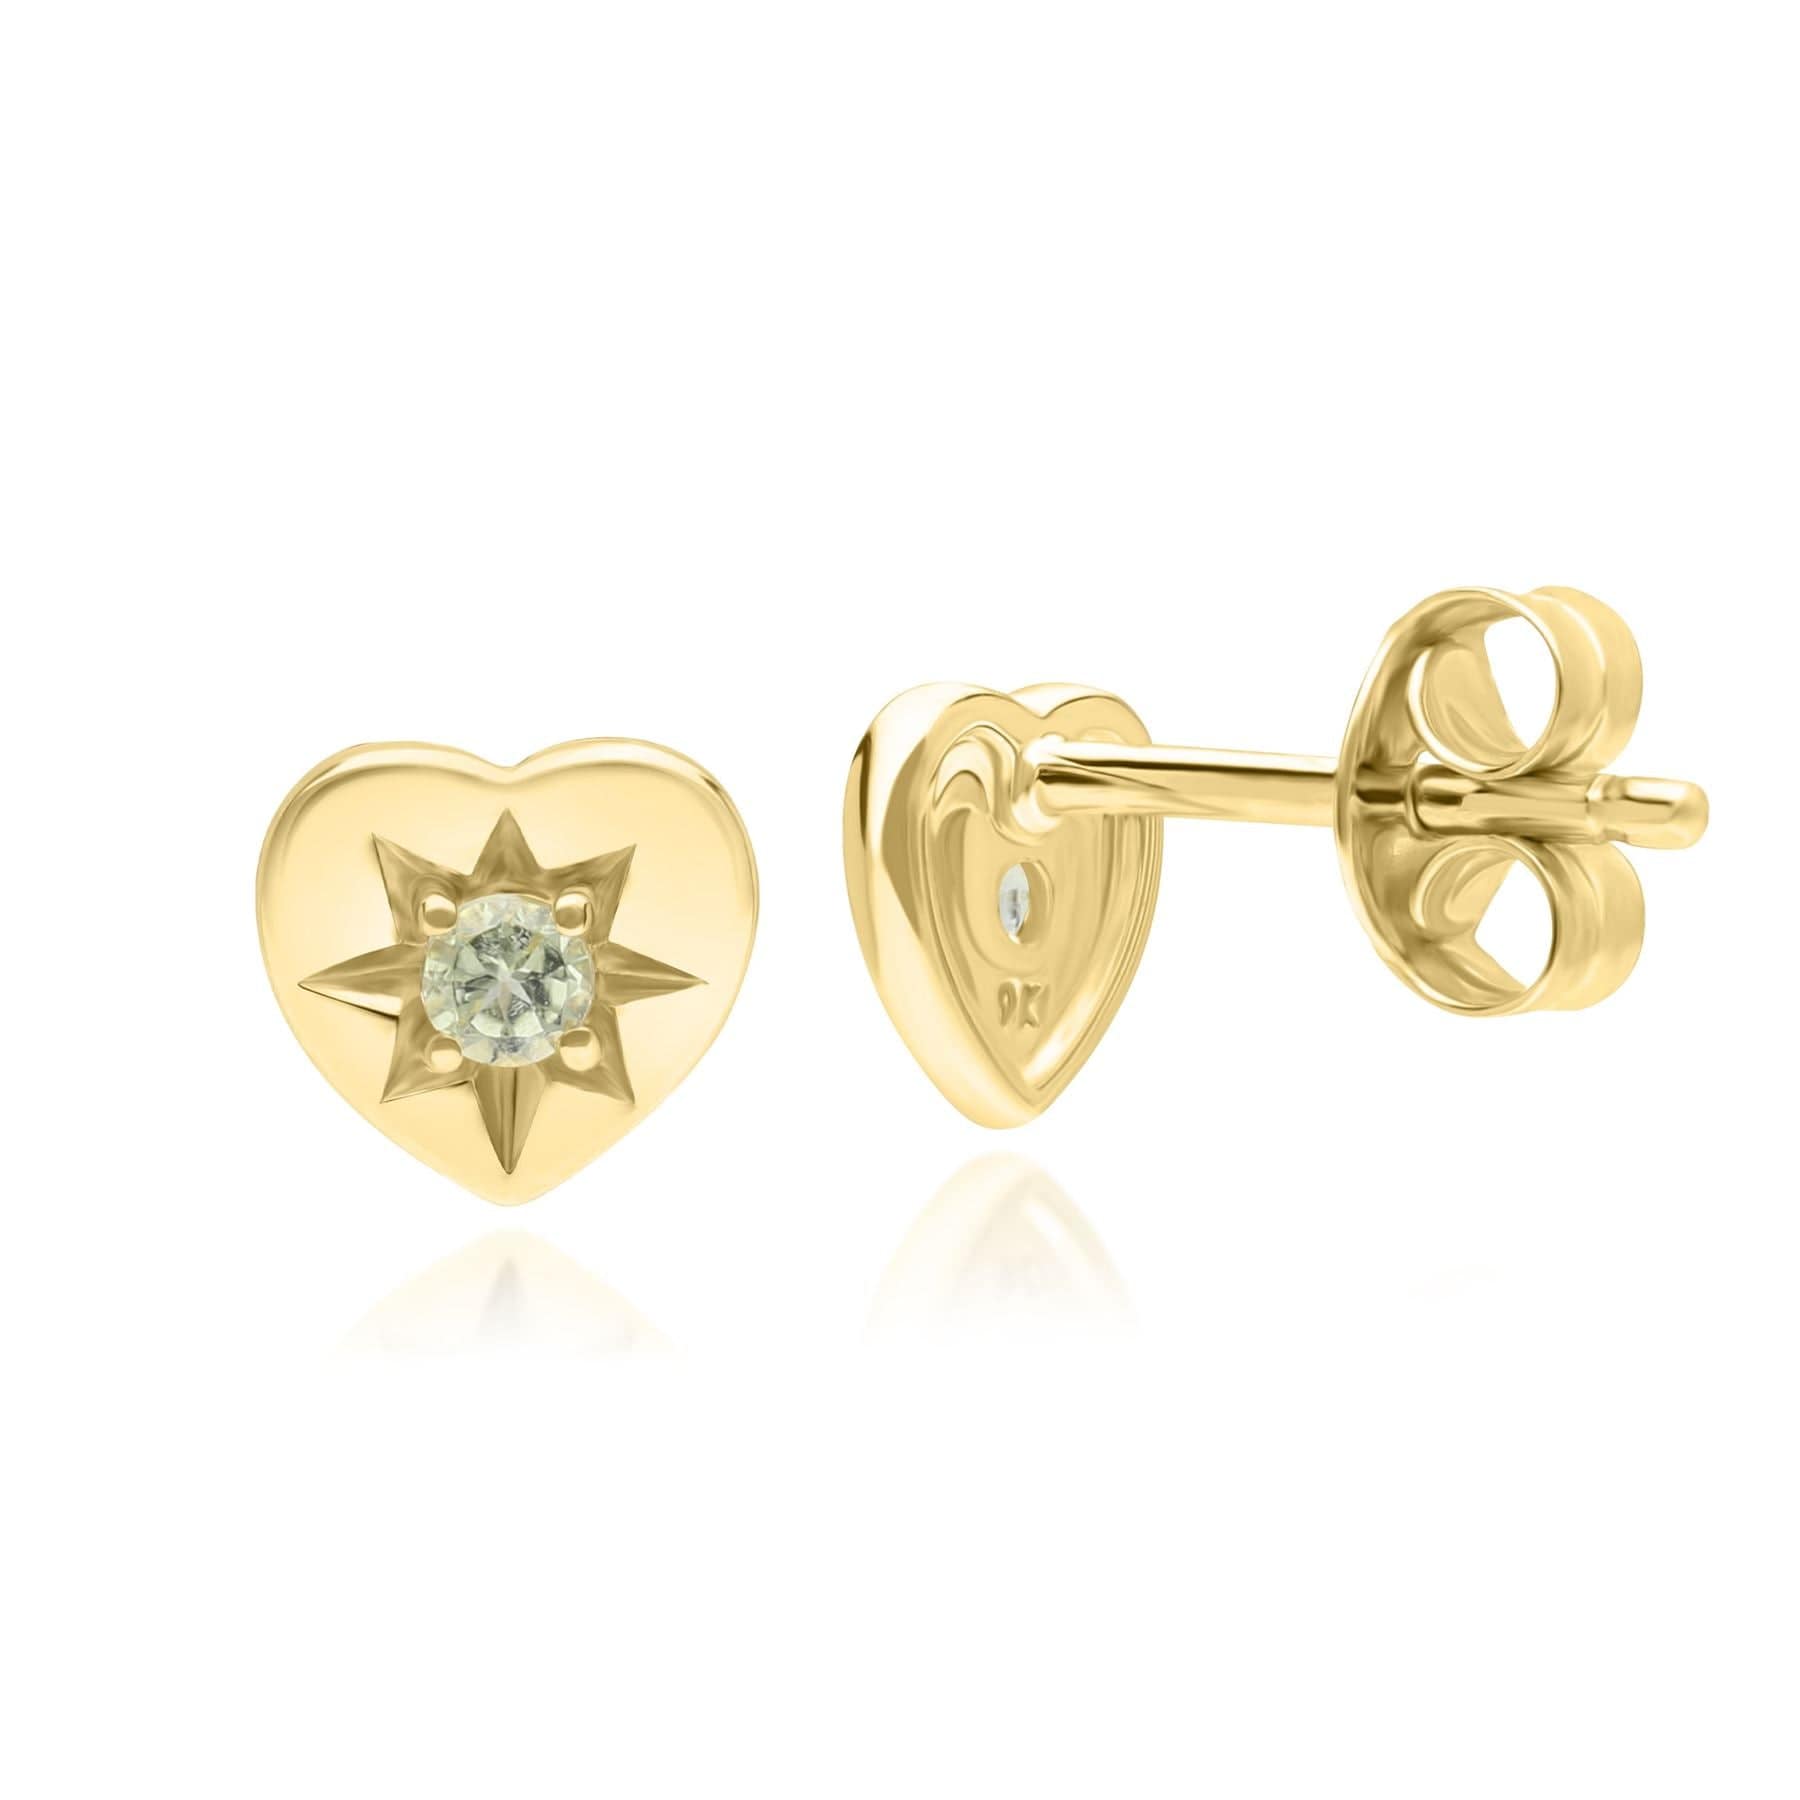 ECFEW™ 'The Liberator' Peridot Heart Stud Earrings in 9ct Yellow Gold - Gemondo